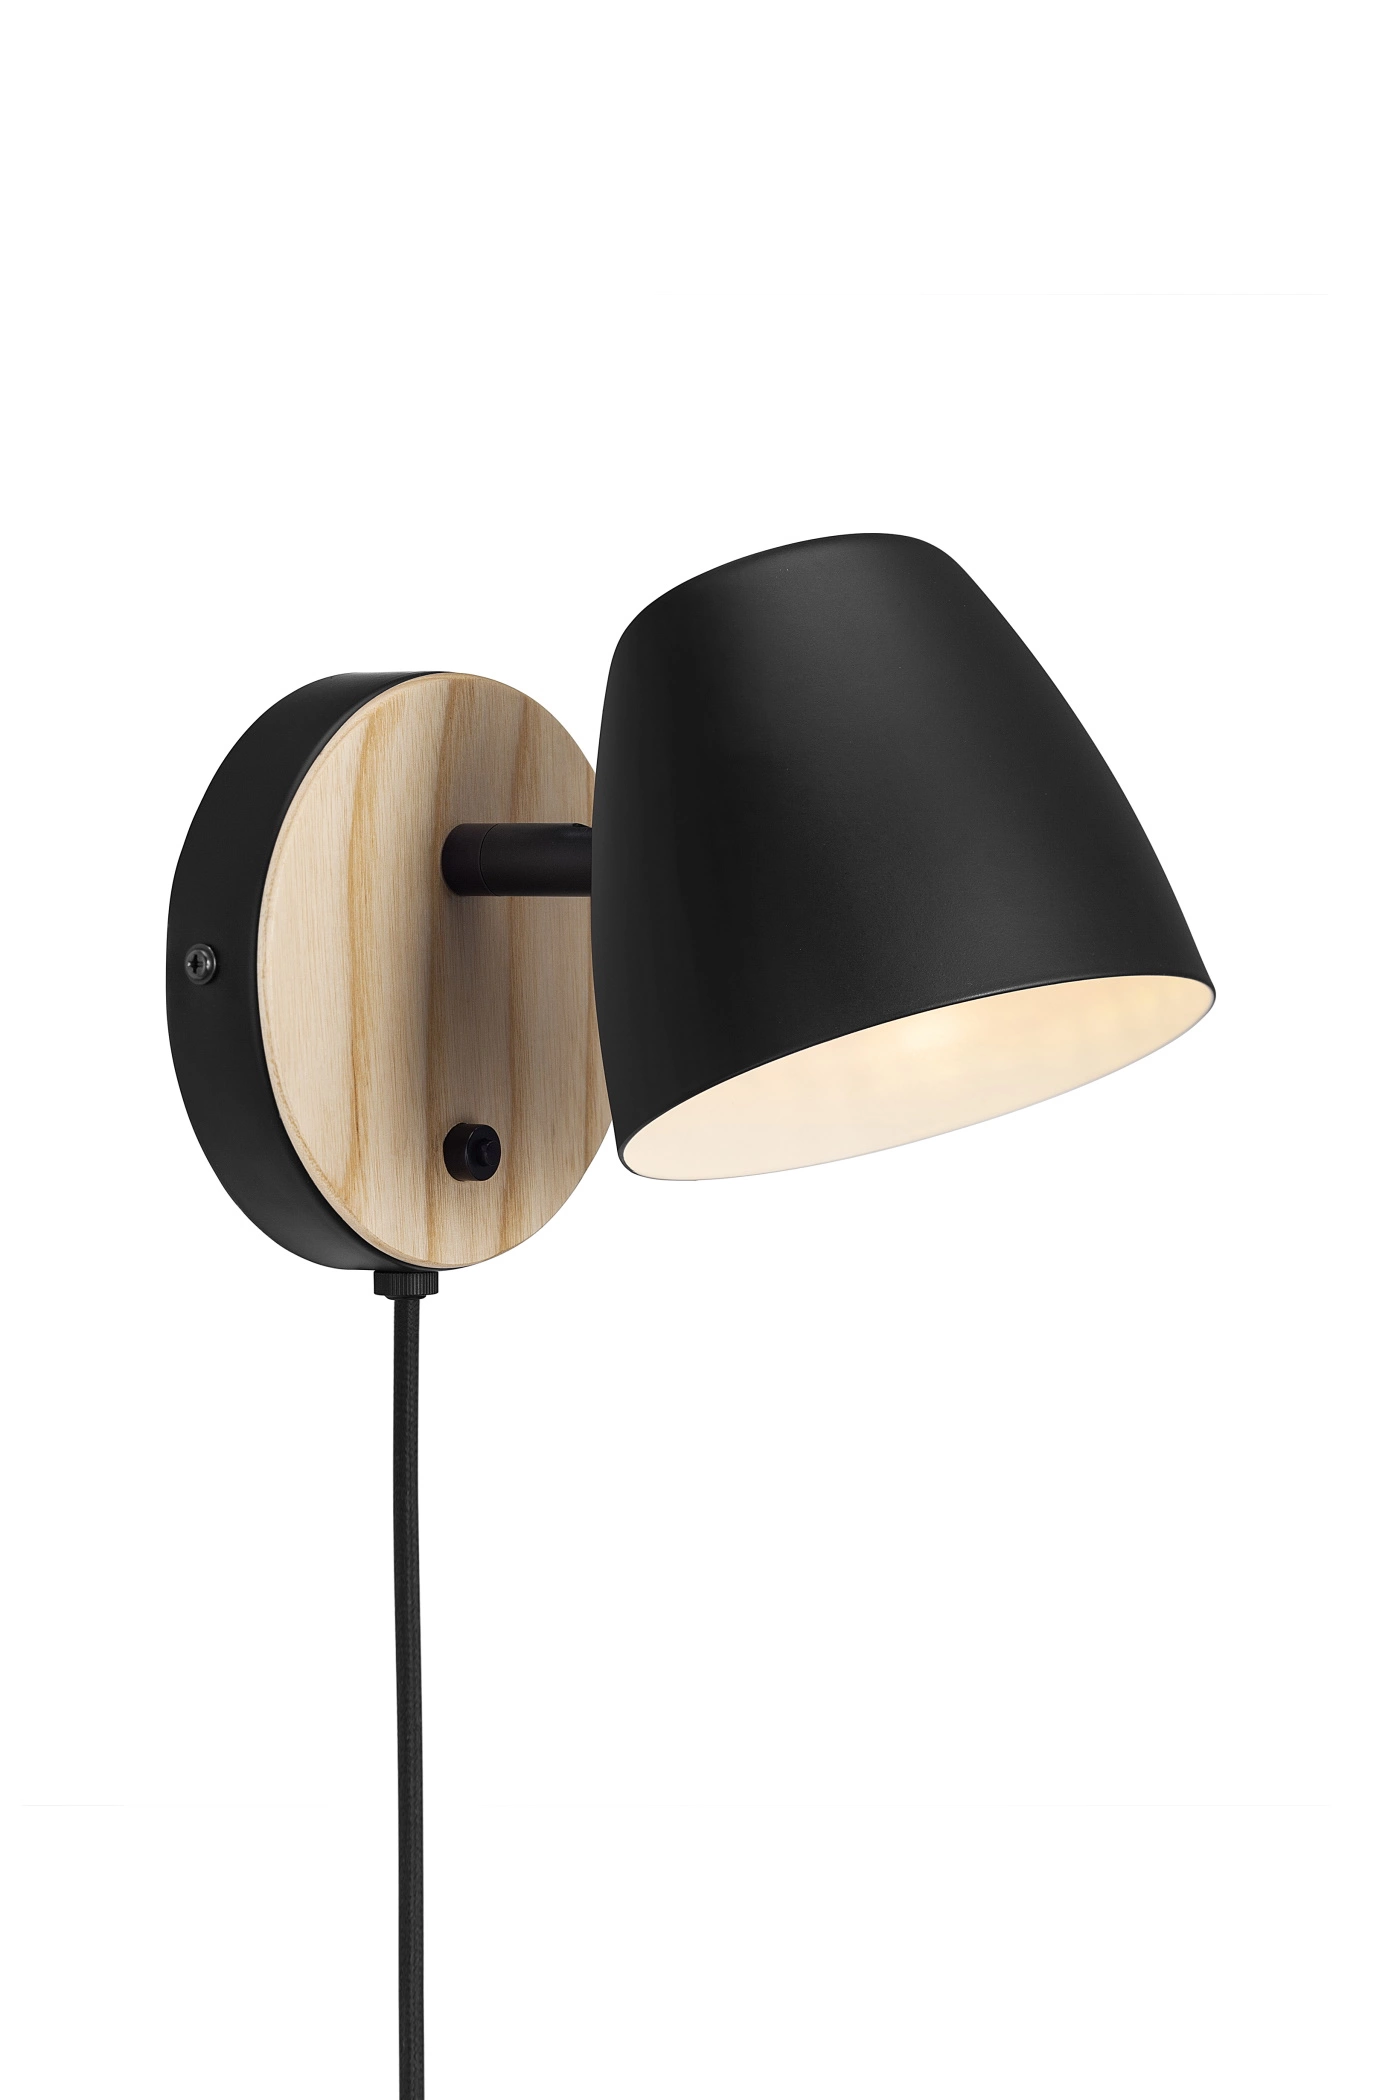   
                        Бра NORDLUX  (Дания) 51333    
                         в стиле Кантри, Лофт.  
                        Тип источника света: светодиодная лампа, сменная.                                                 Цвета плафонов и подвесок: Черный.                         Материал: Металл.                          фото 1